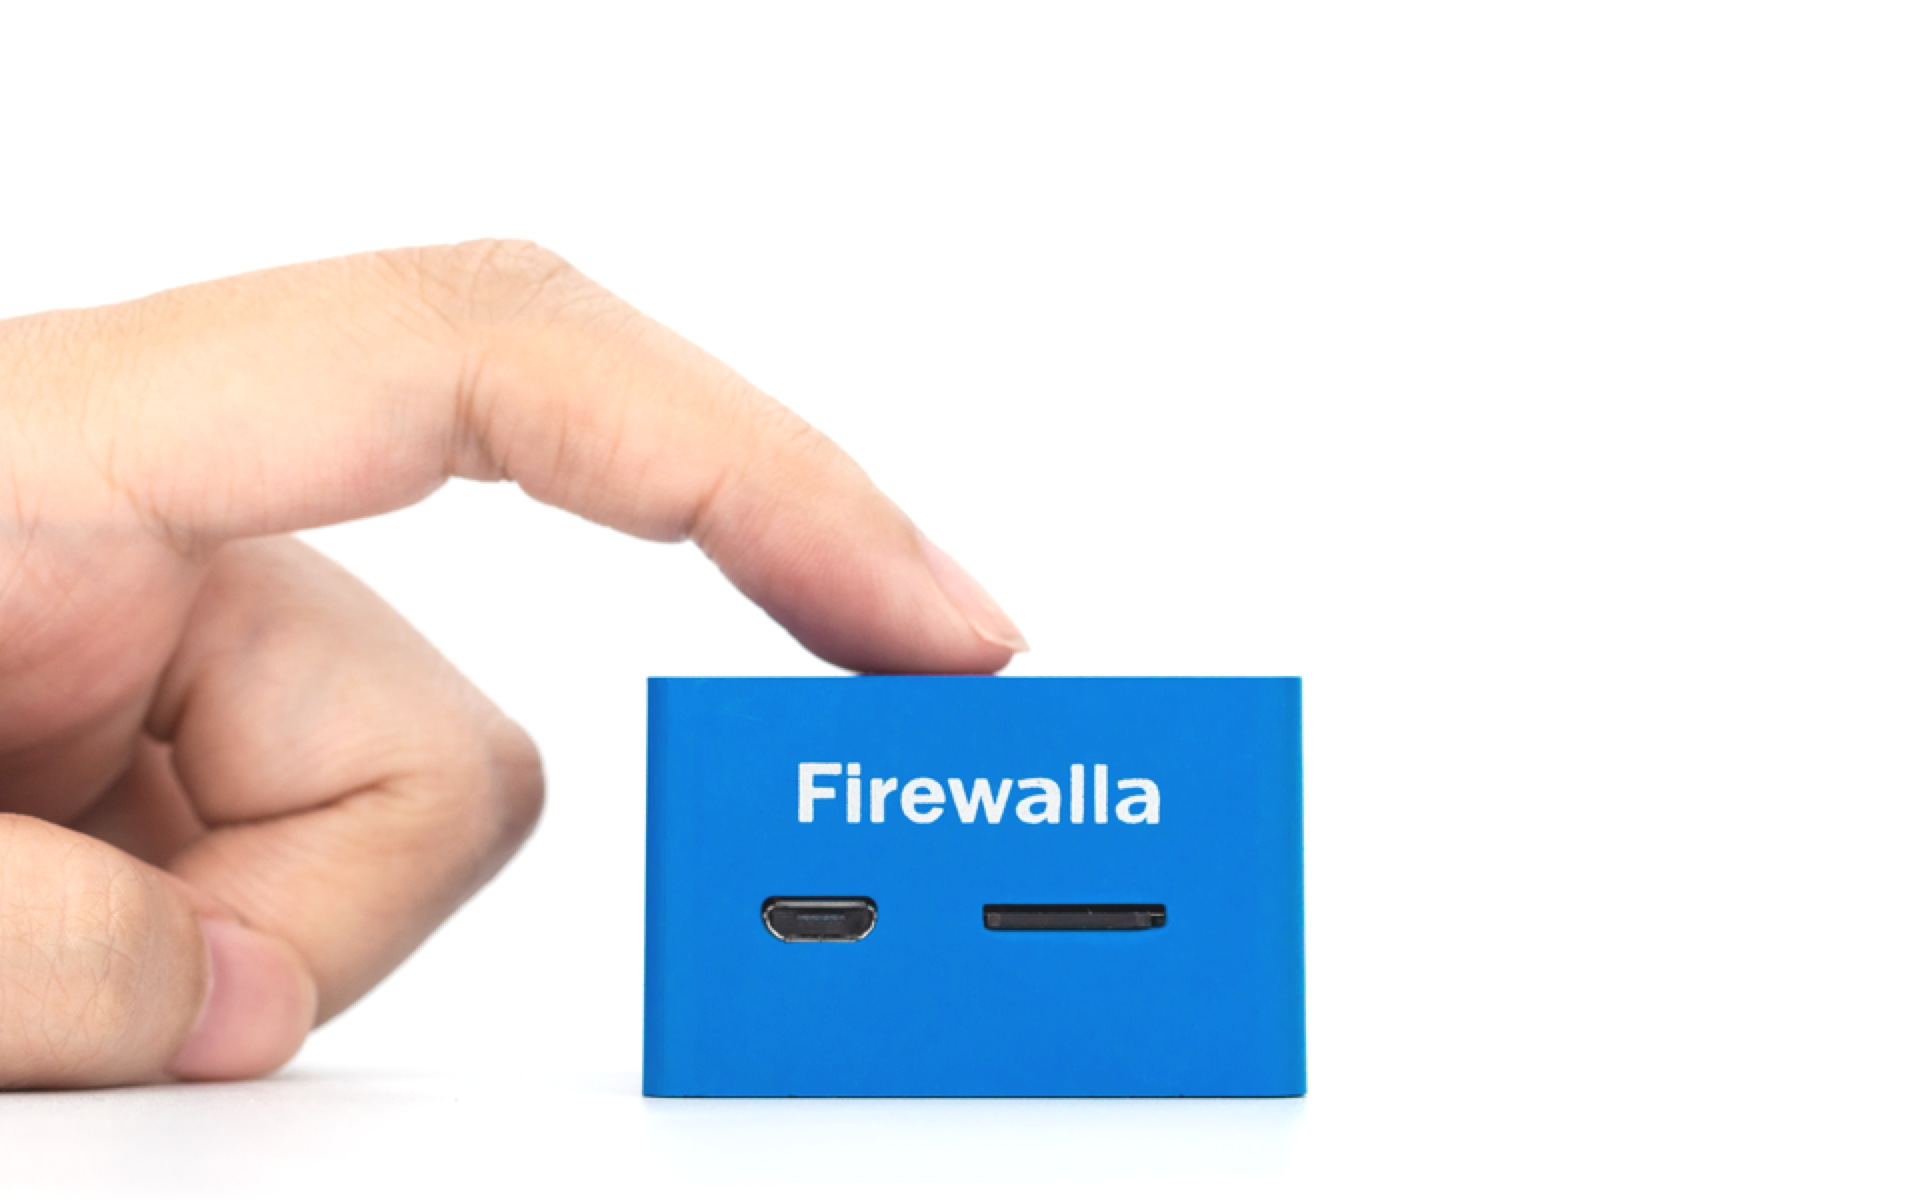 FireWalla